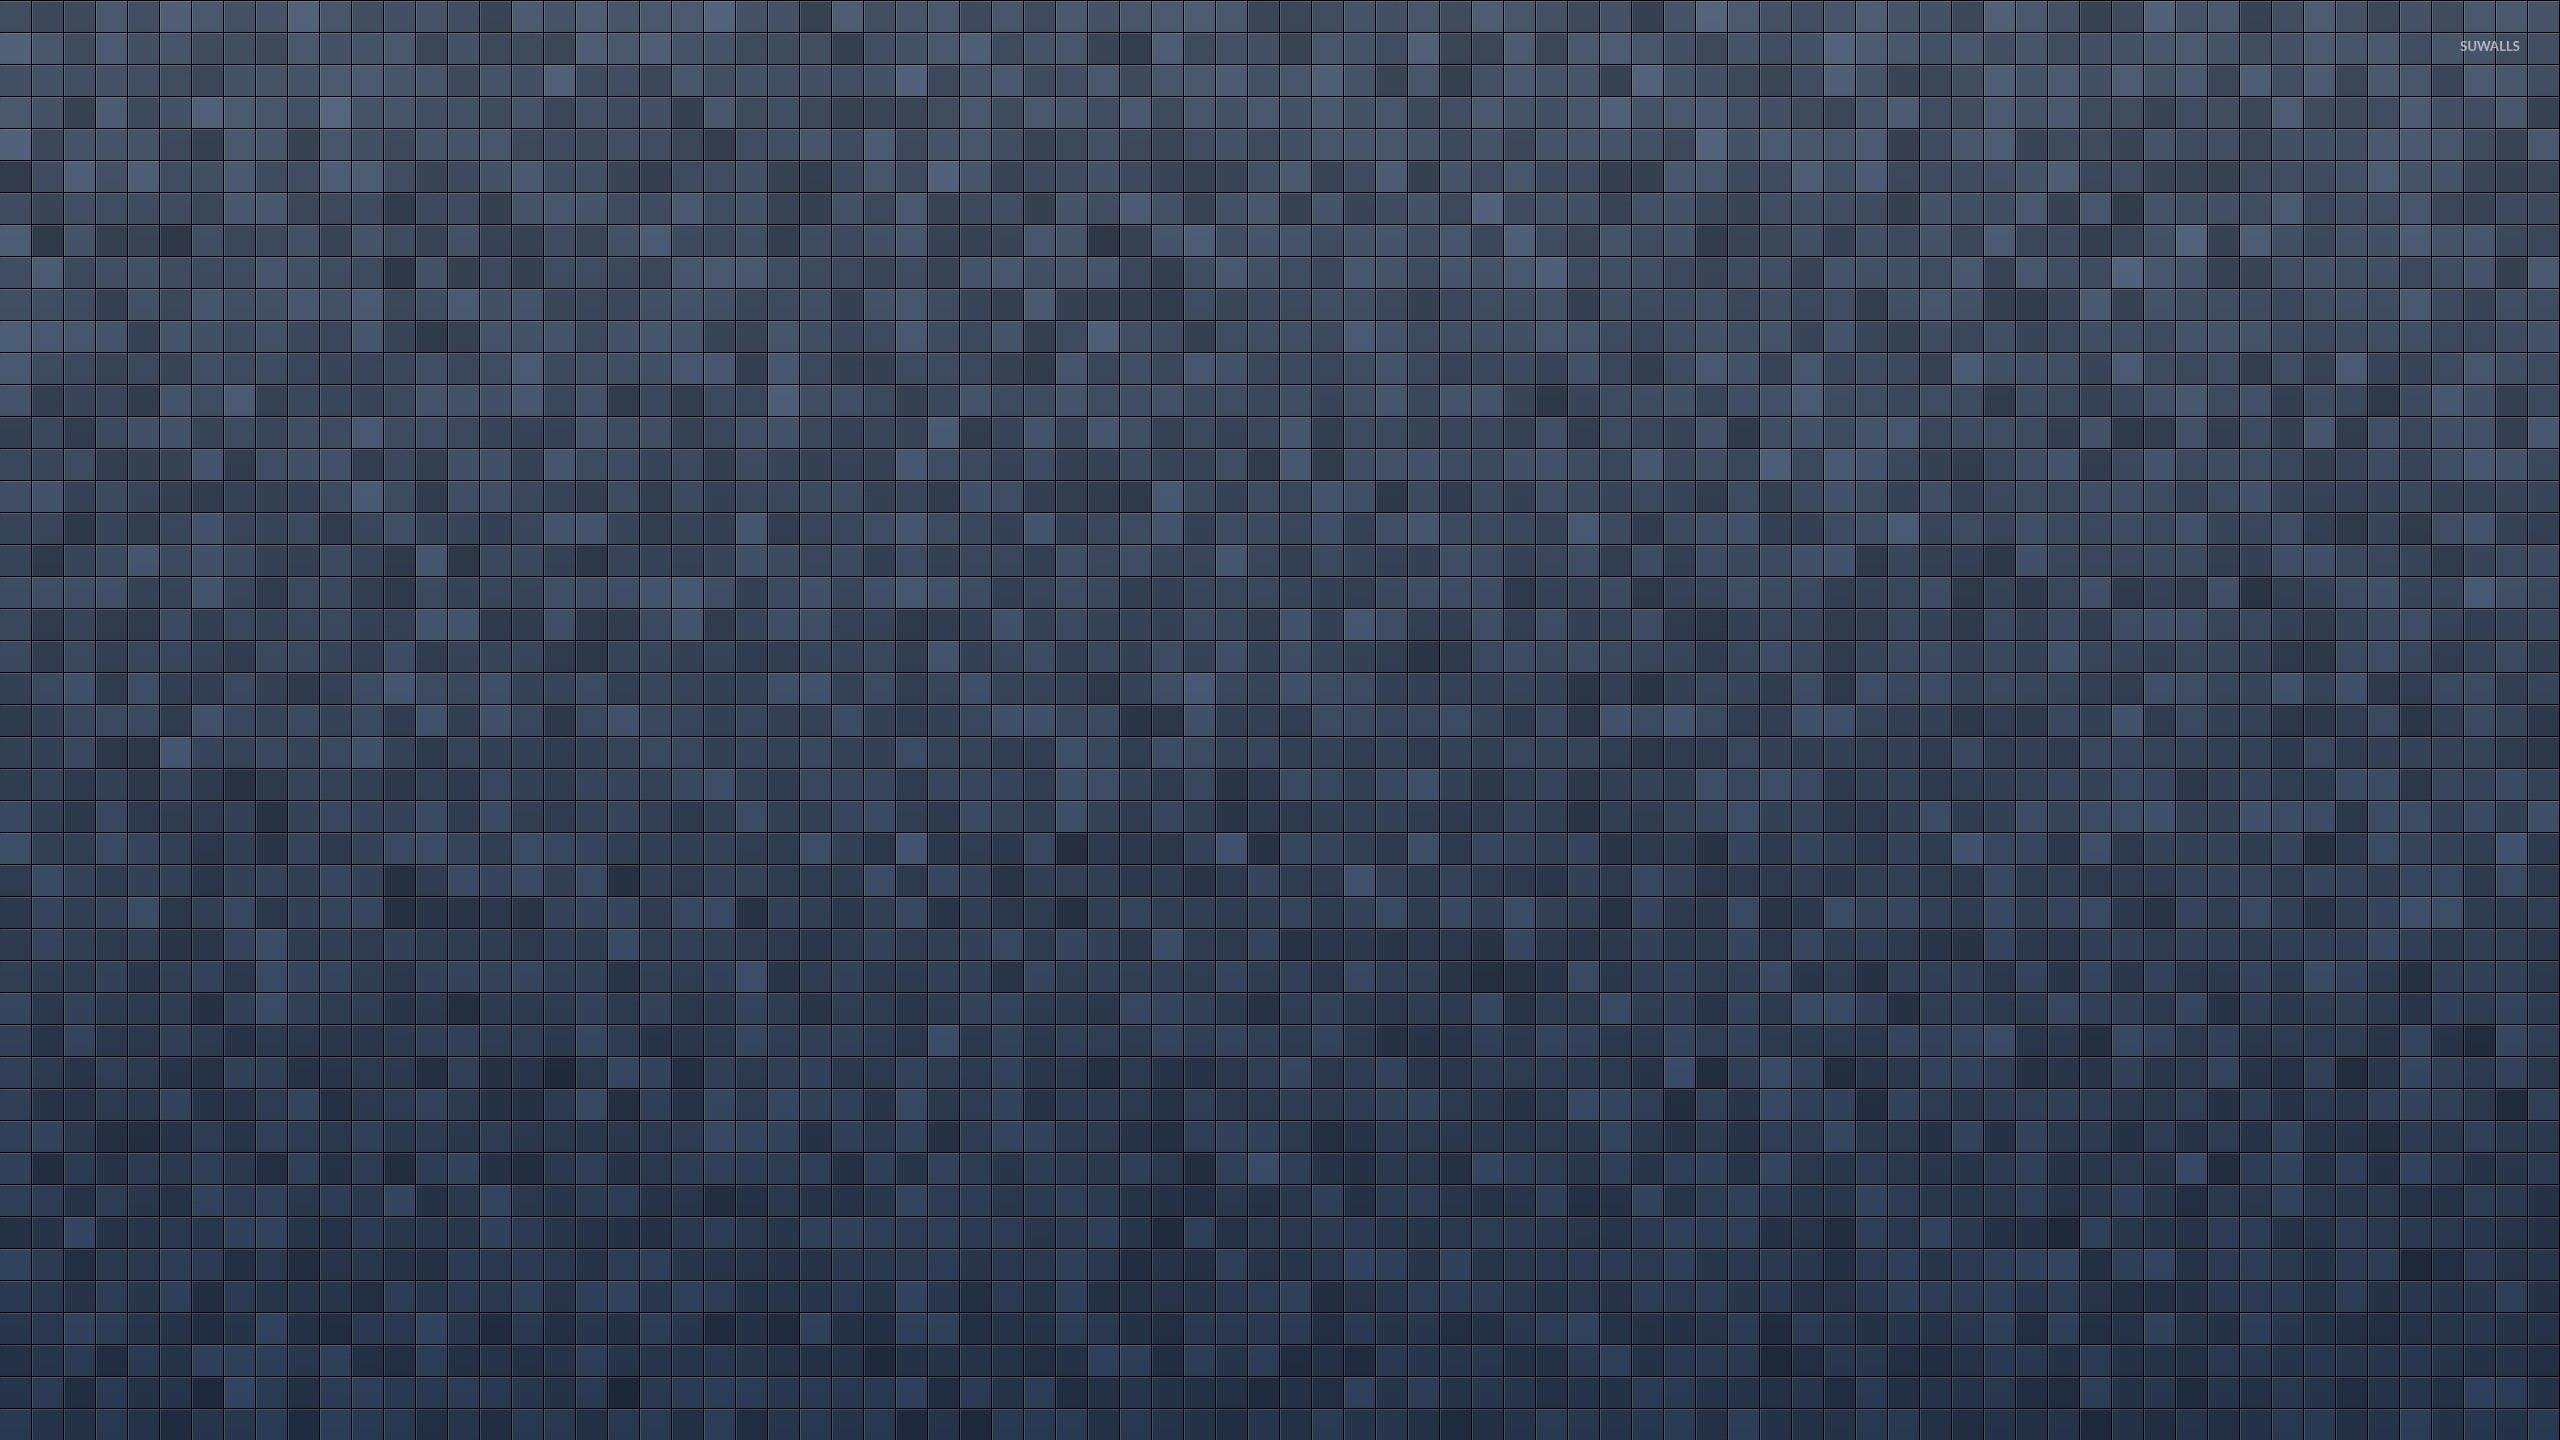 Blue Squares Wallpaper Abstract Wallpapers 45486 HD Wallpapers Download Free Map Images Wallpaper [wallpaper376.blogspot.com]